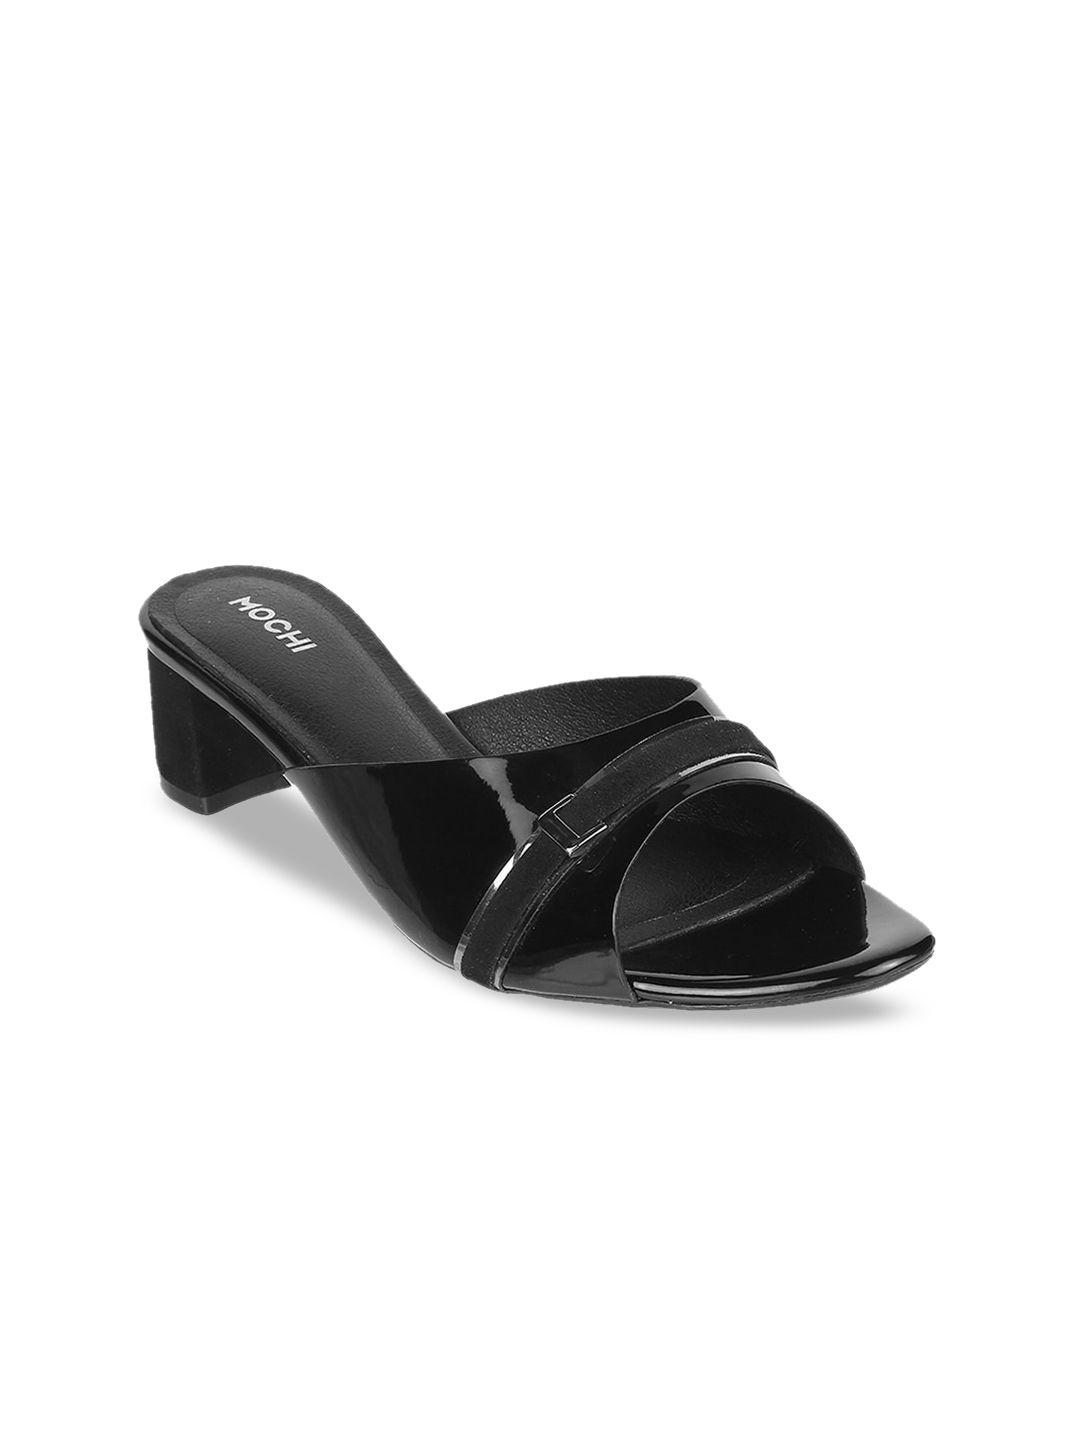 mochi women black solid block heels